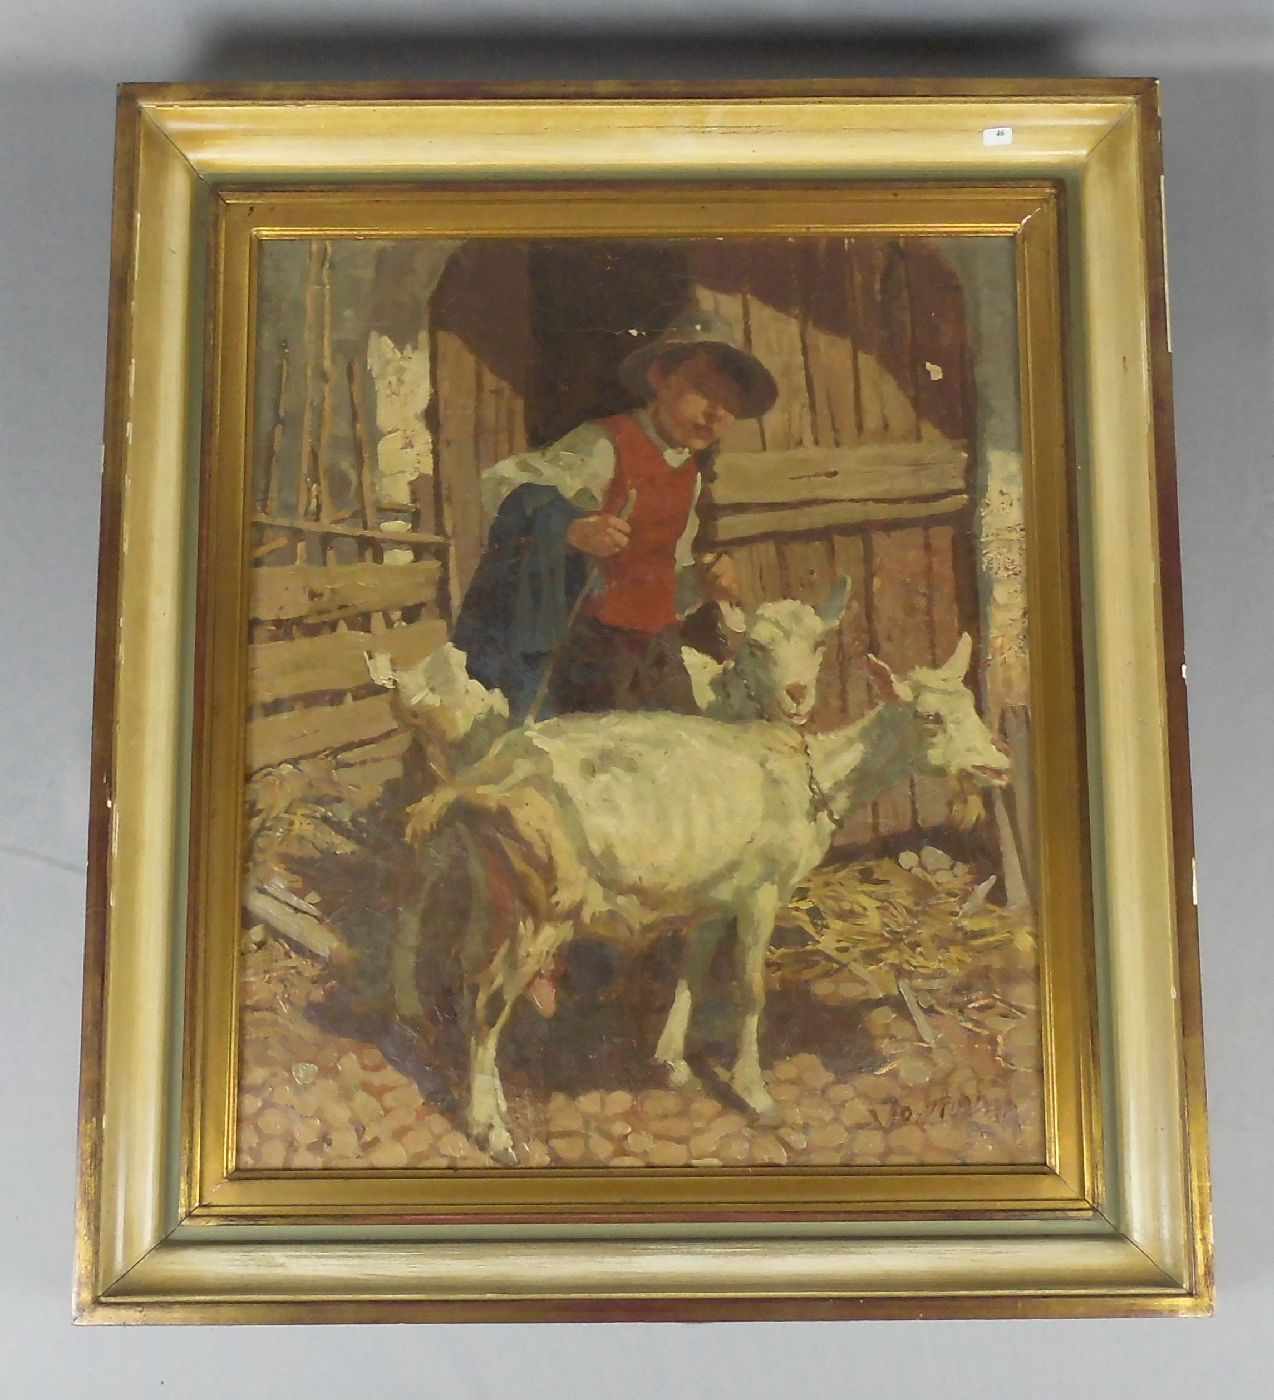 STRAHN, PETER JOSEF (Düren 1904-1997 Düsseldorf), Gemälde / painting: "Ziegenhirte", Öl auf Leinwand